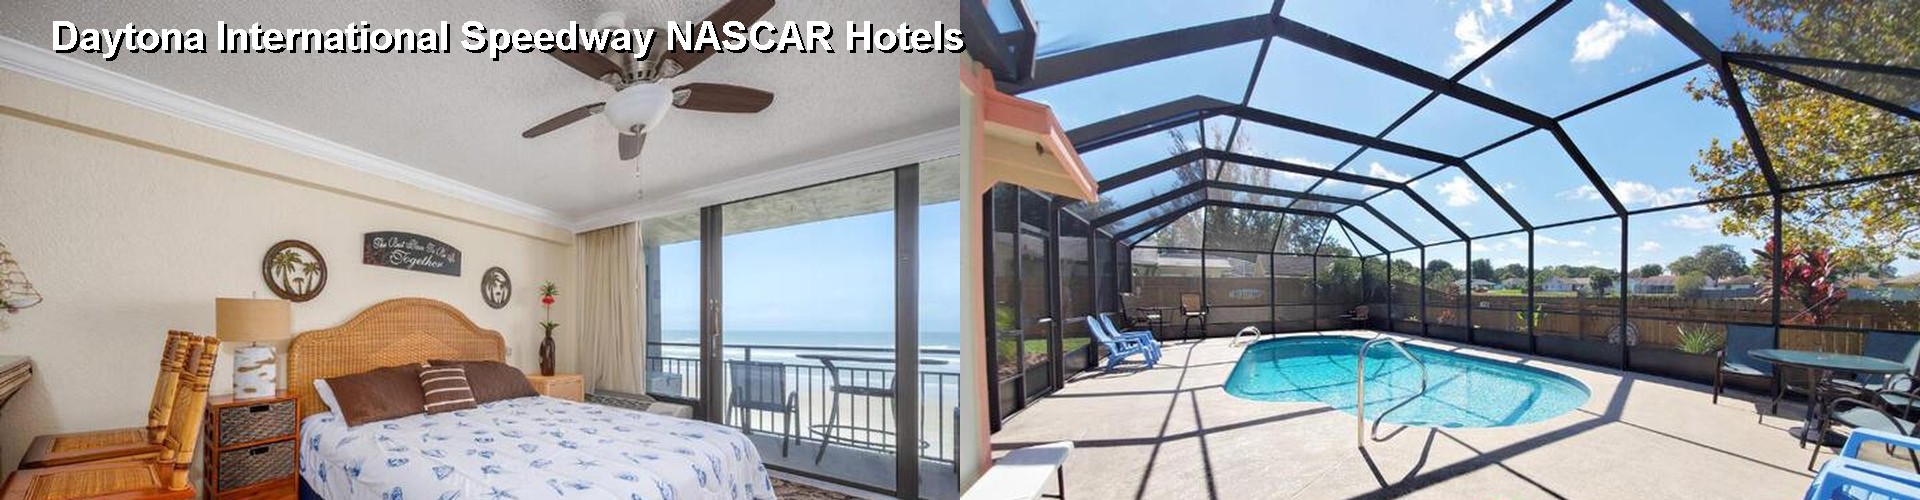 5 Best Hotels near Daytona International Speedway NASCAR